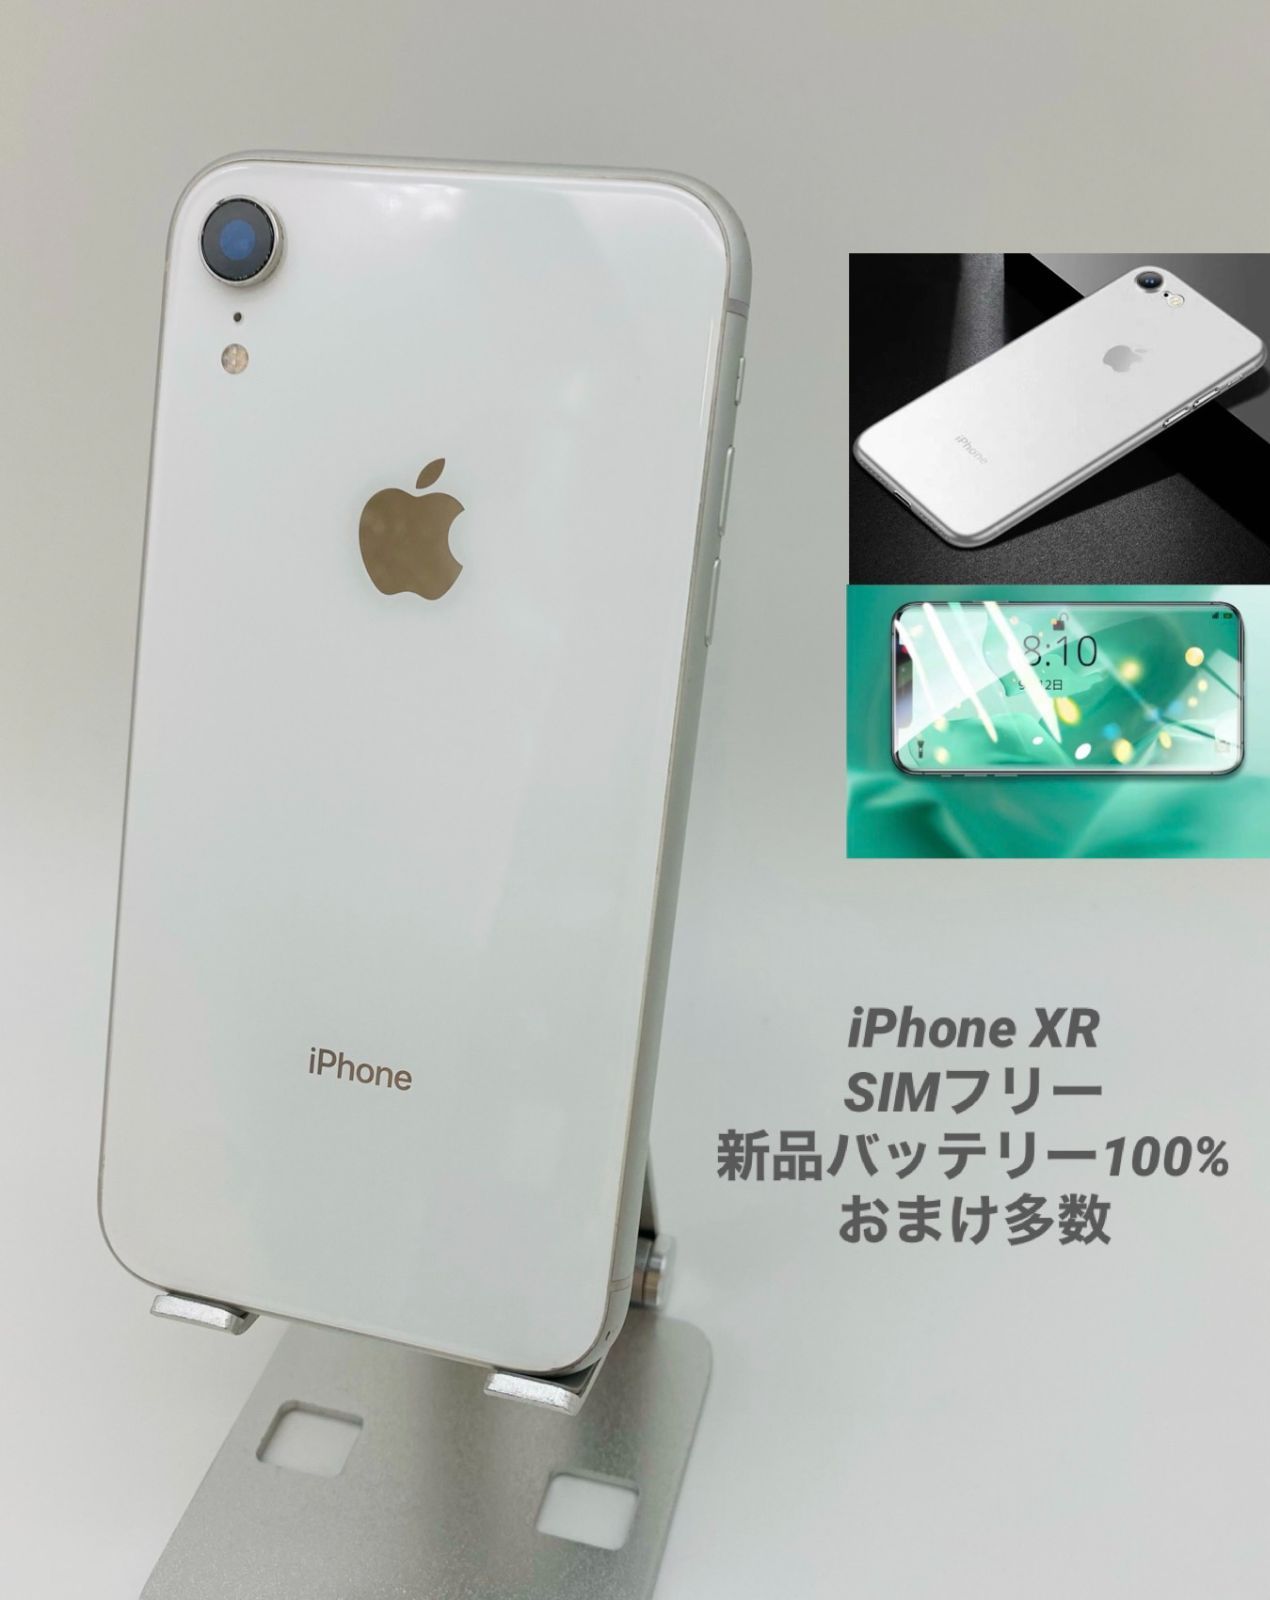 ☆FaceID不可☆iPhoneXR 64GB ホワイト/新品バッテリー100%/ストア版シムフリー/おまけ多数 XR-031 - メルカリ